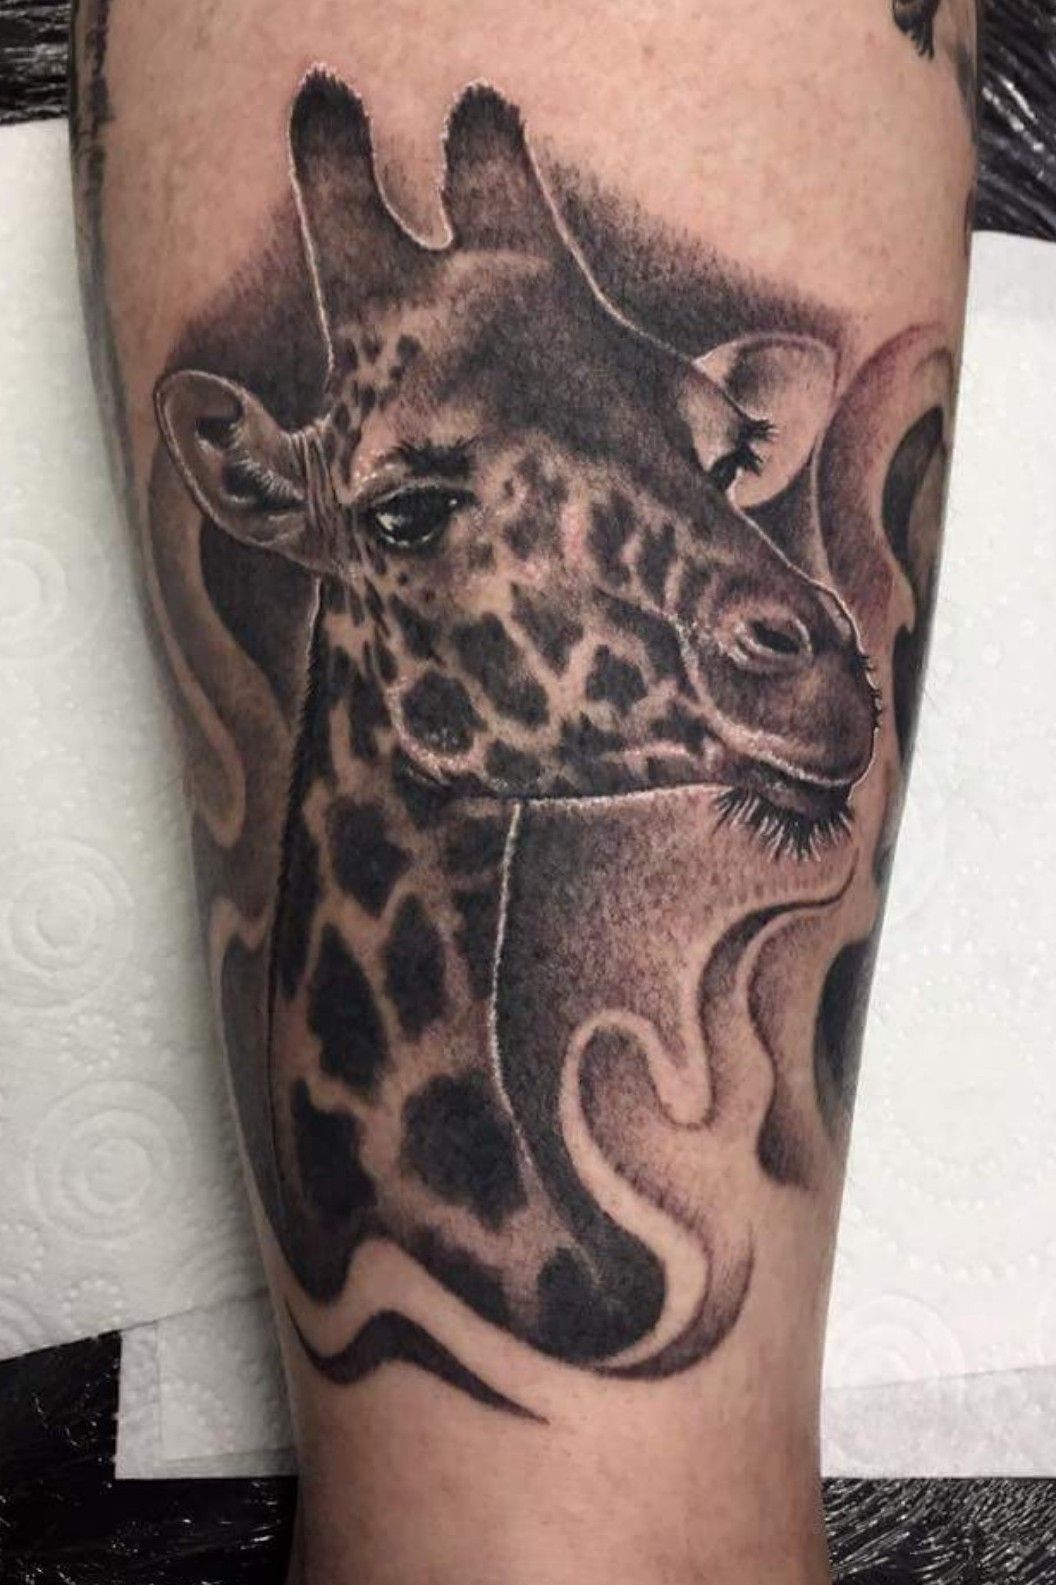 Microrealistic giraffe tattoo on the inner forearm